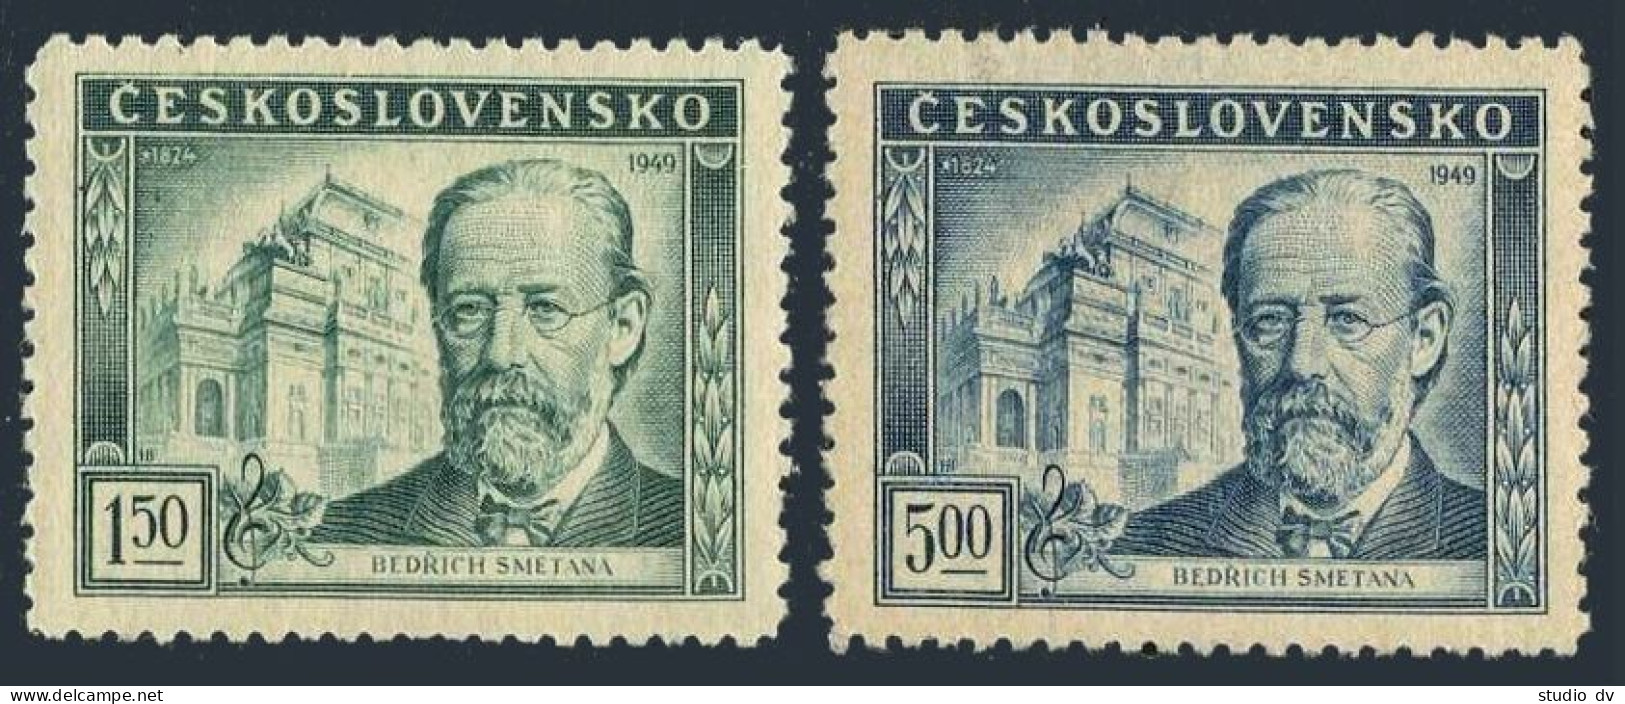 Czechoslovakia 386-387, MNH. Michel 578-579. Bedrich Smetana, Composer, 1949. - Ungebraucht